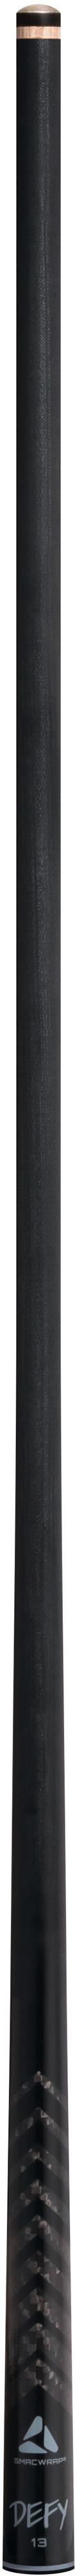 McDermott Defy Carbon Fiber BREAK Shaft - 5/16x18 Pool Cue